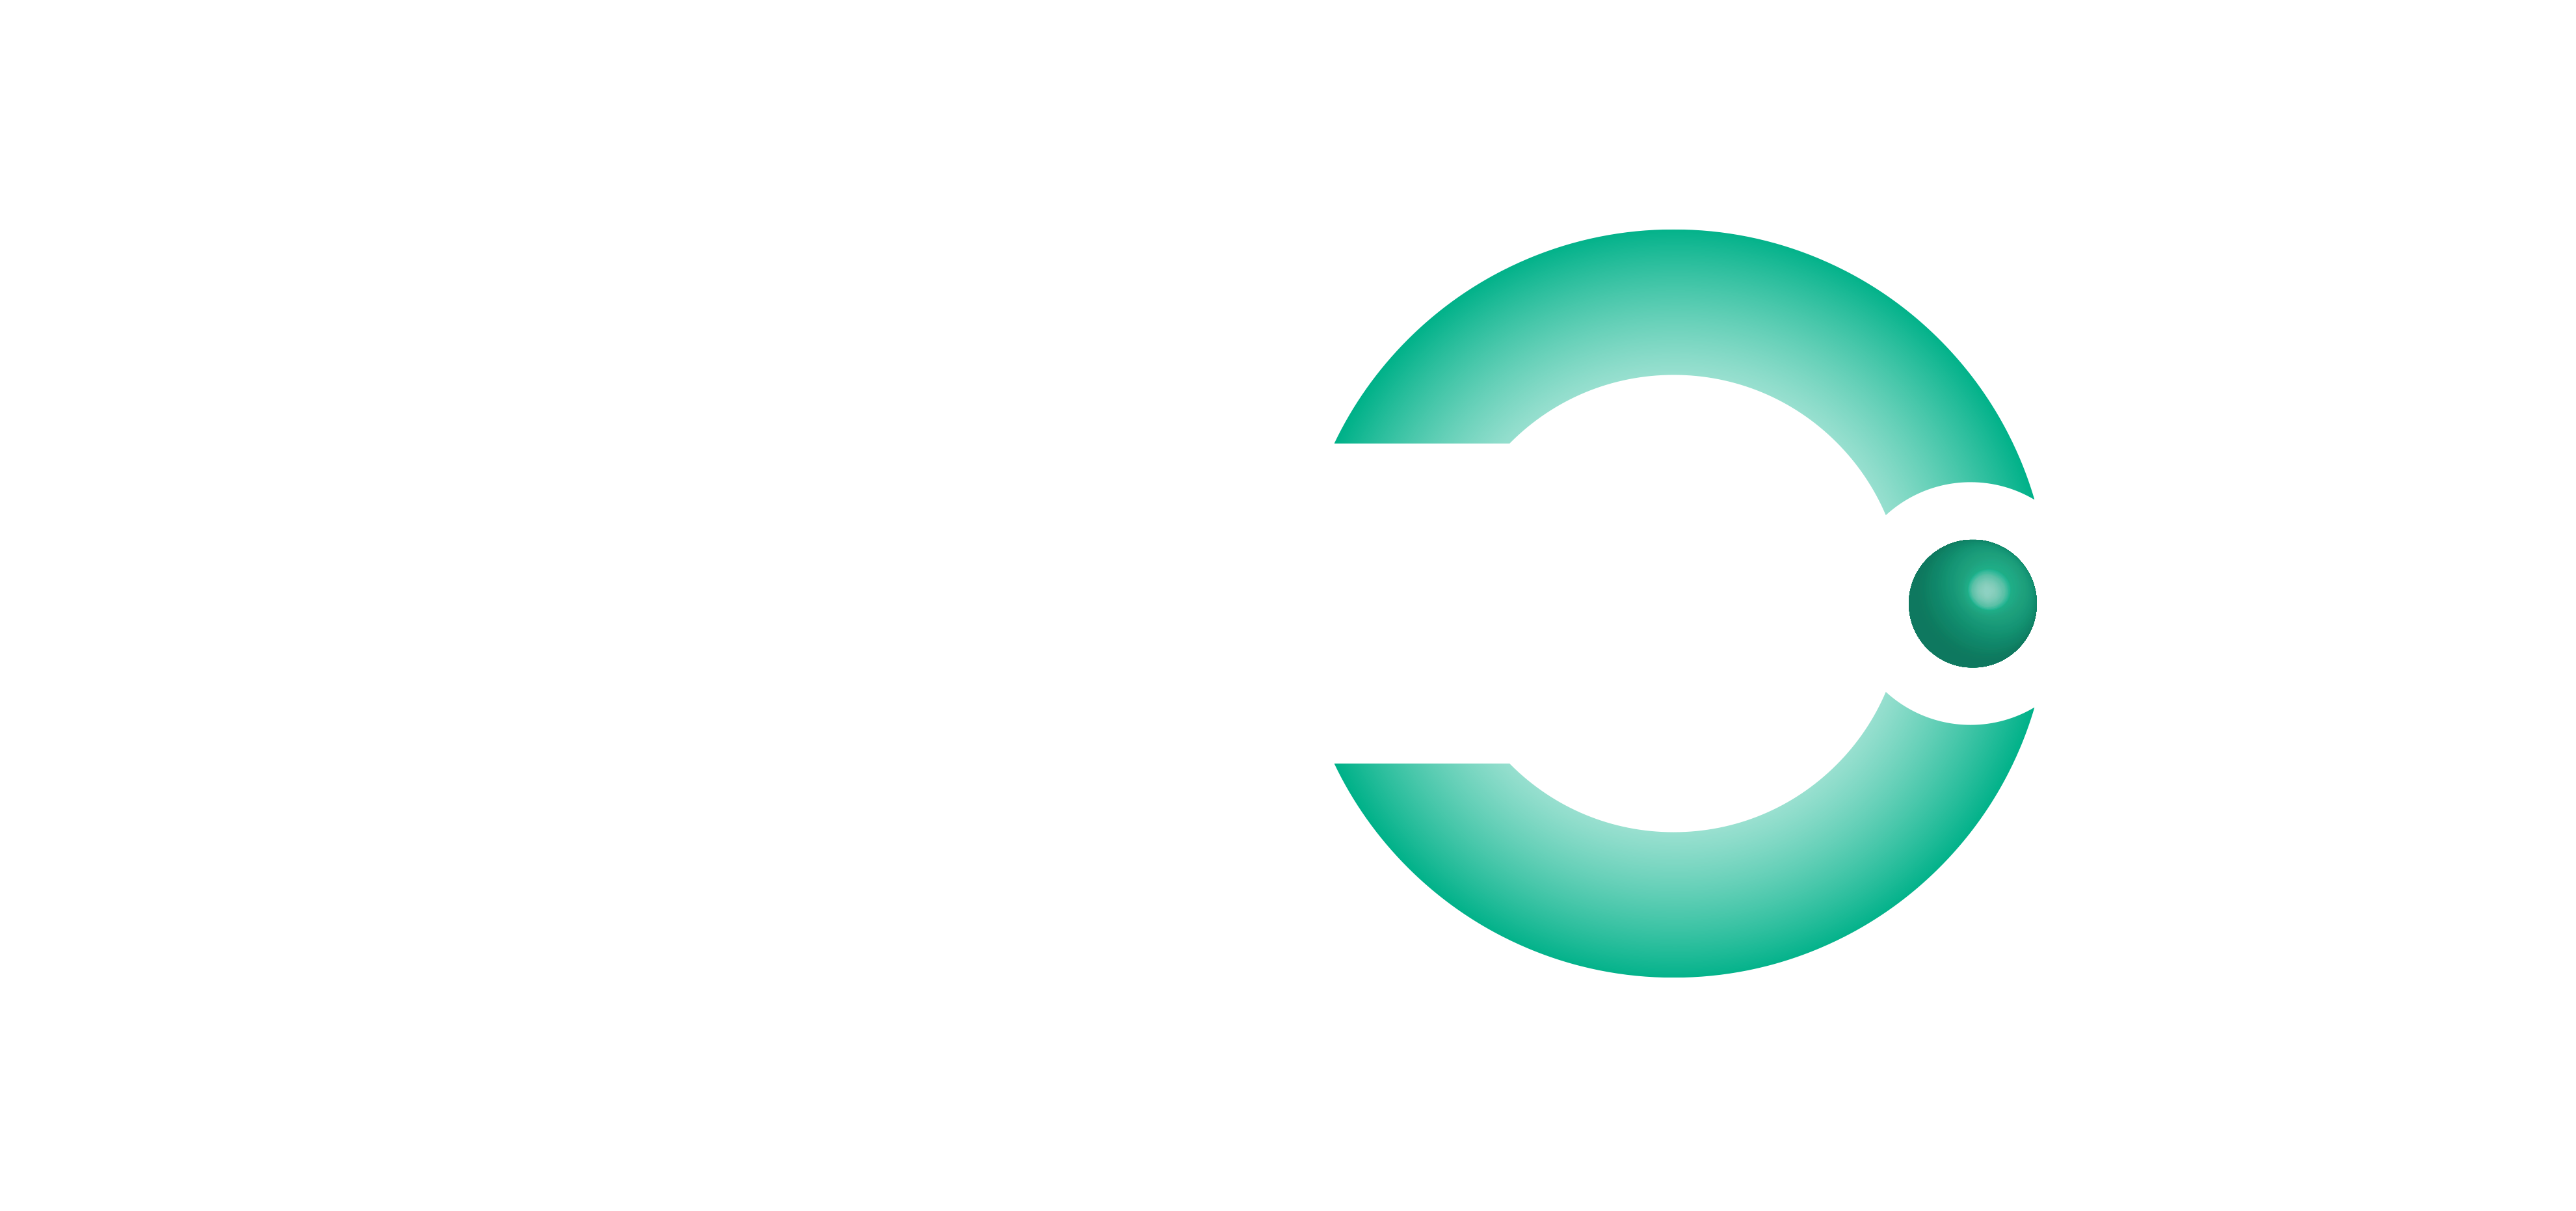 Brand recognition for OncoProg